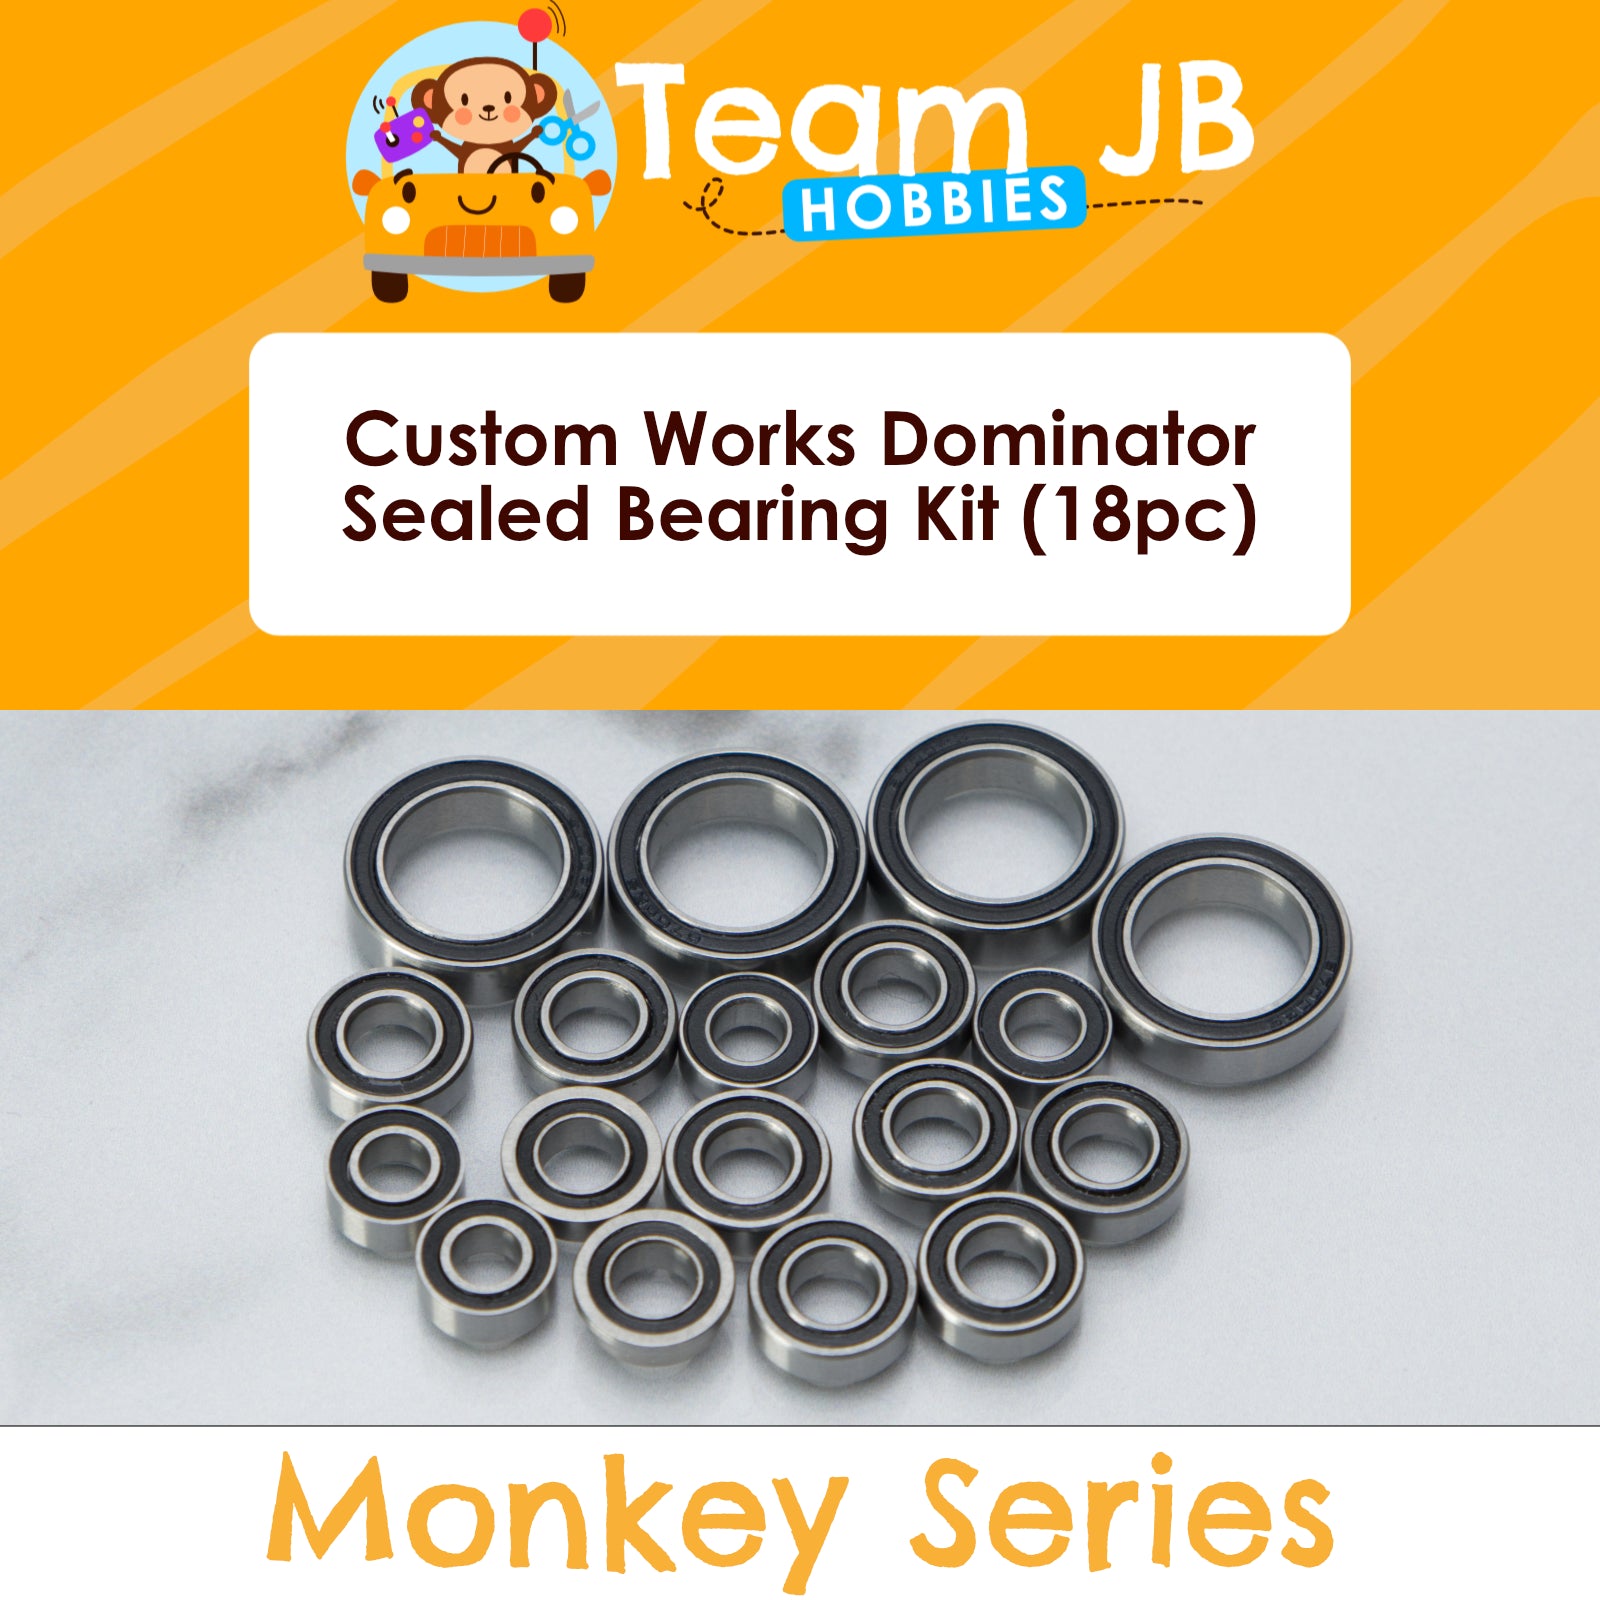 Custom Works Dominator - Sealed Bearing Kit